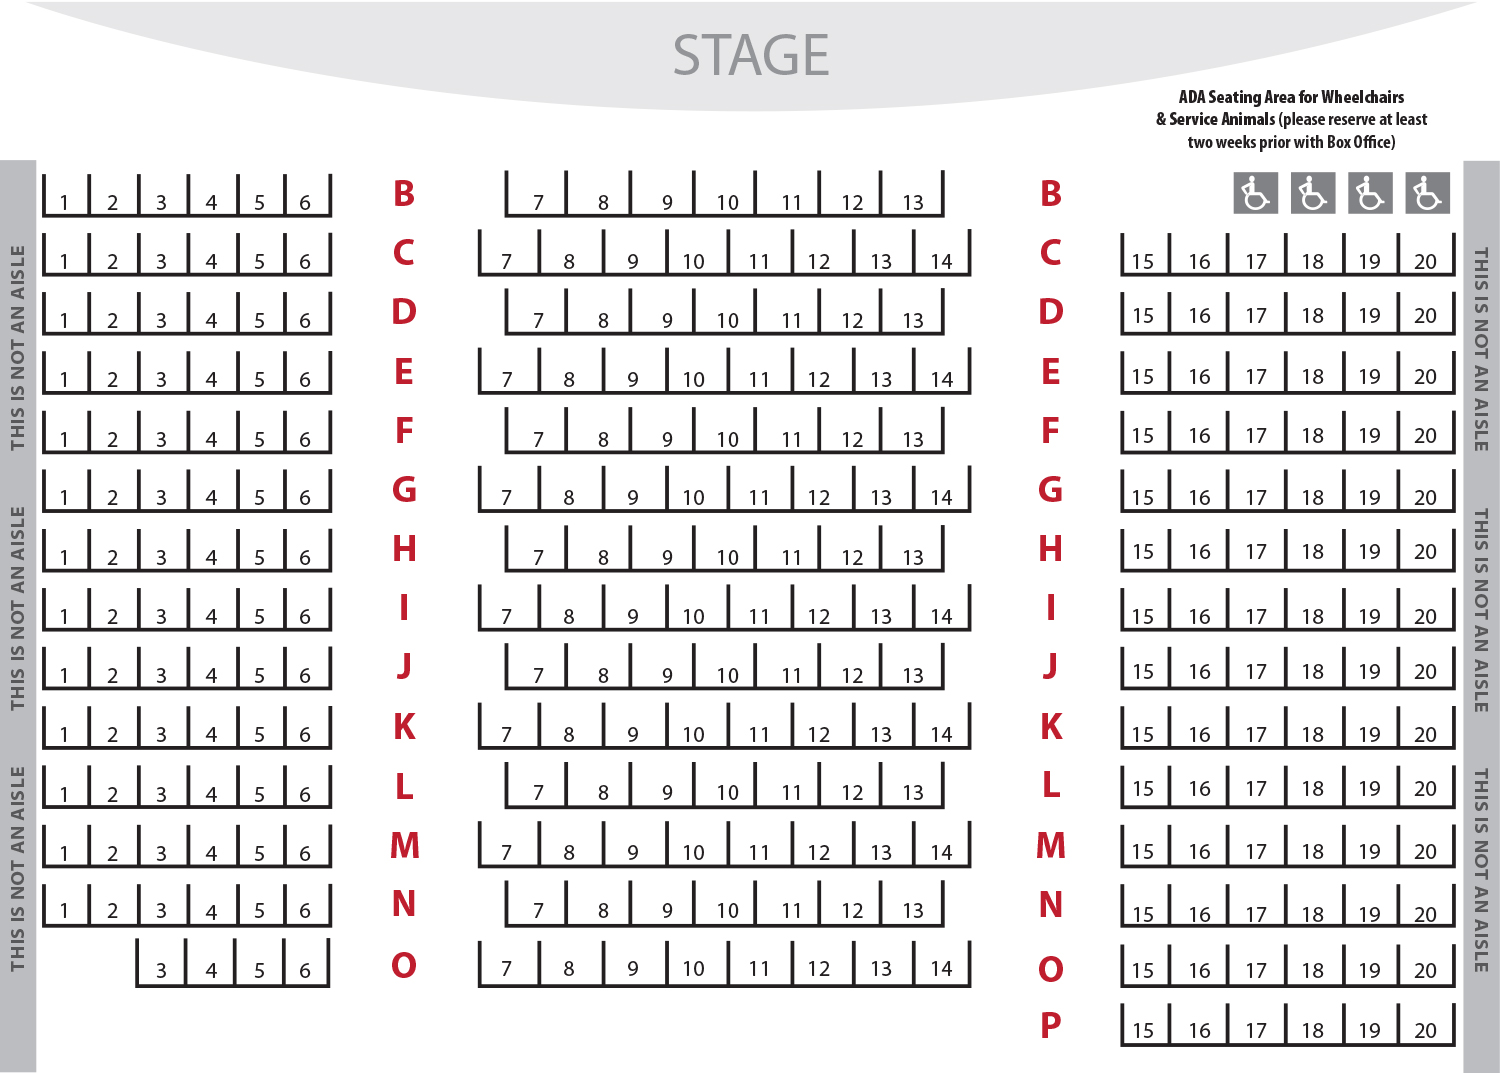 Apopka Amphitheater Seating Chart